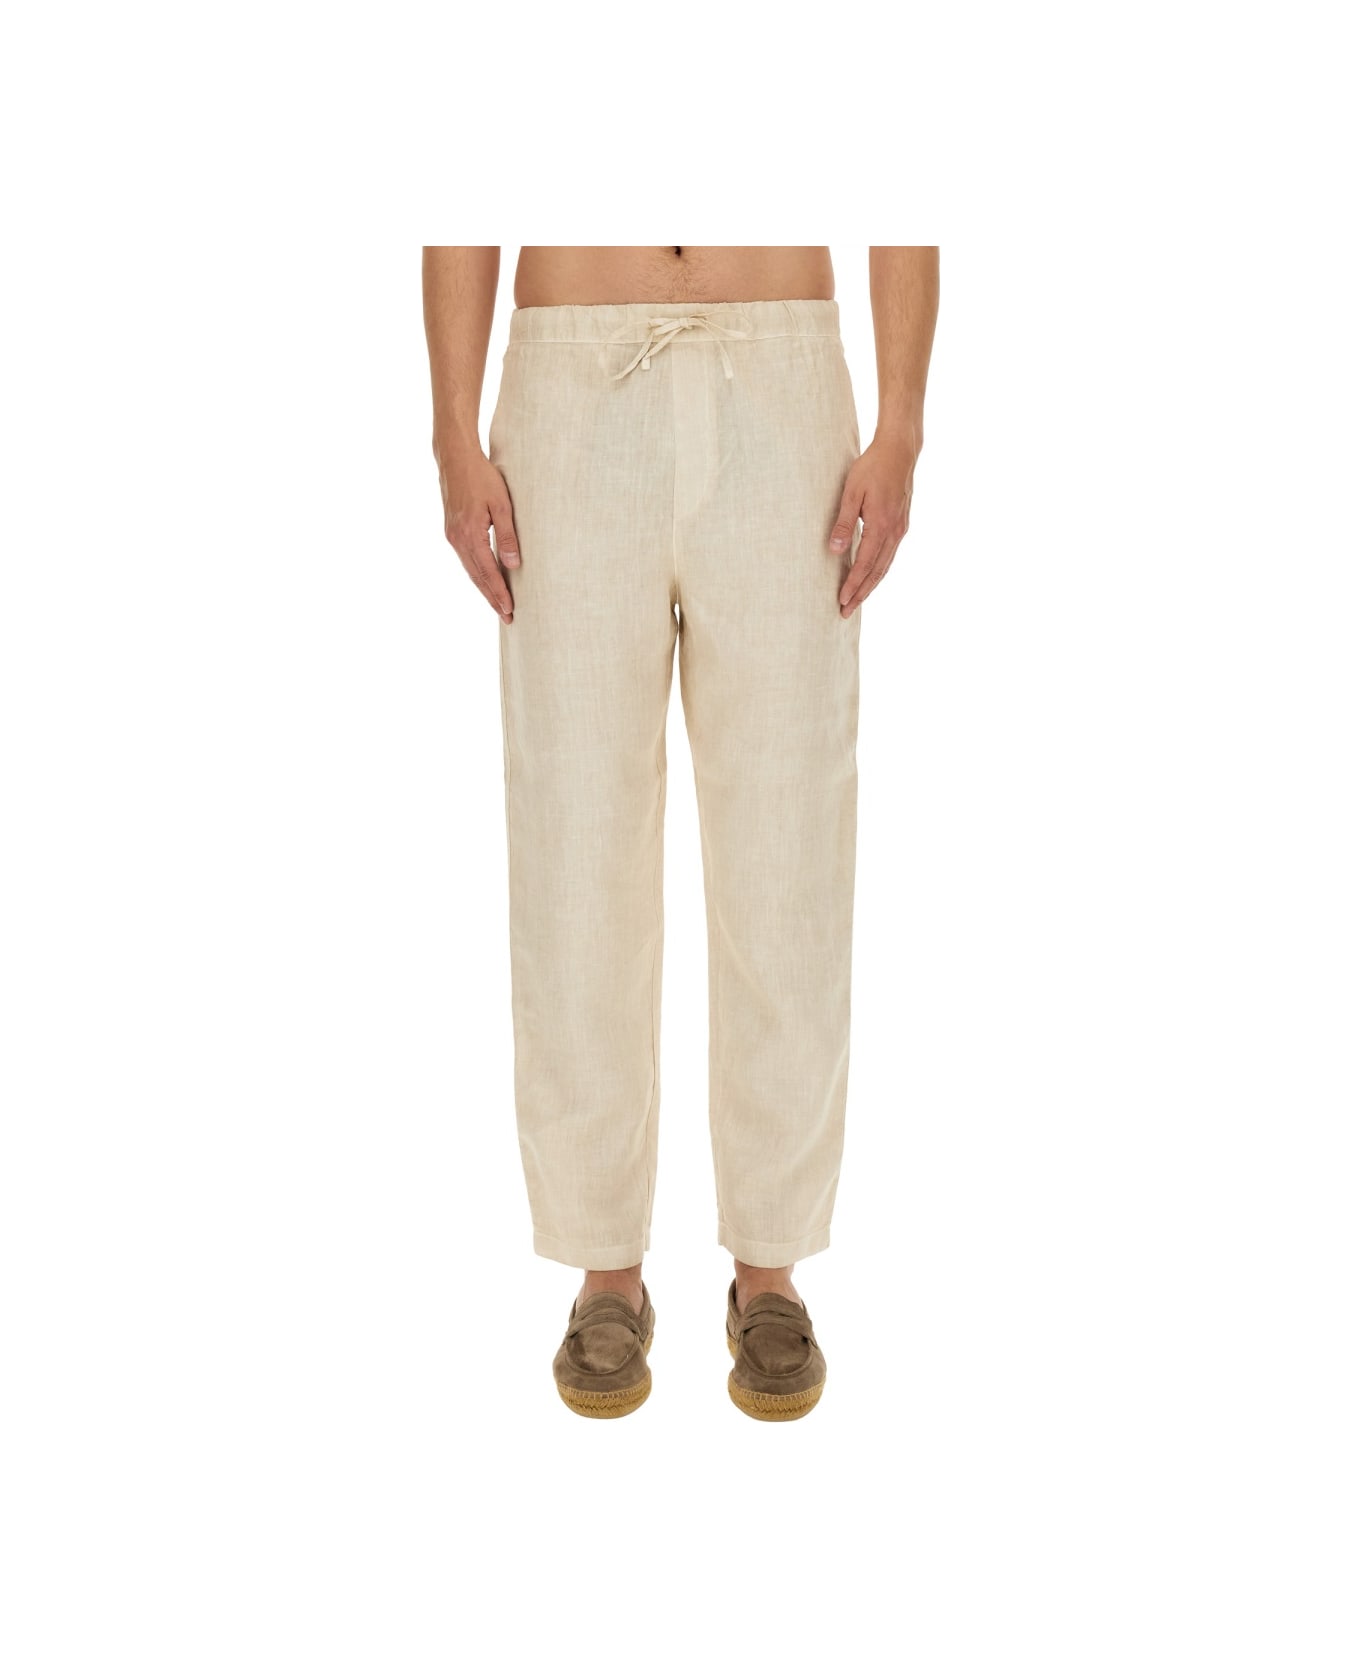 120% Lino Linen Pants - IVORY